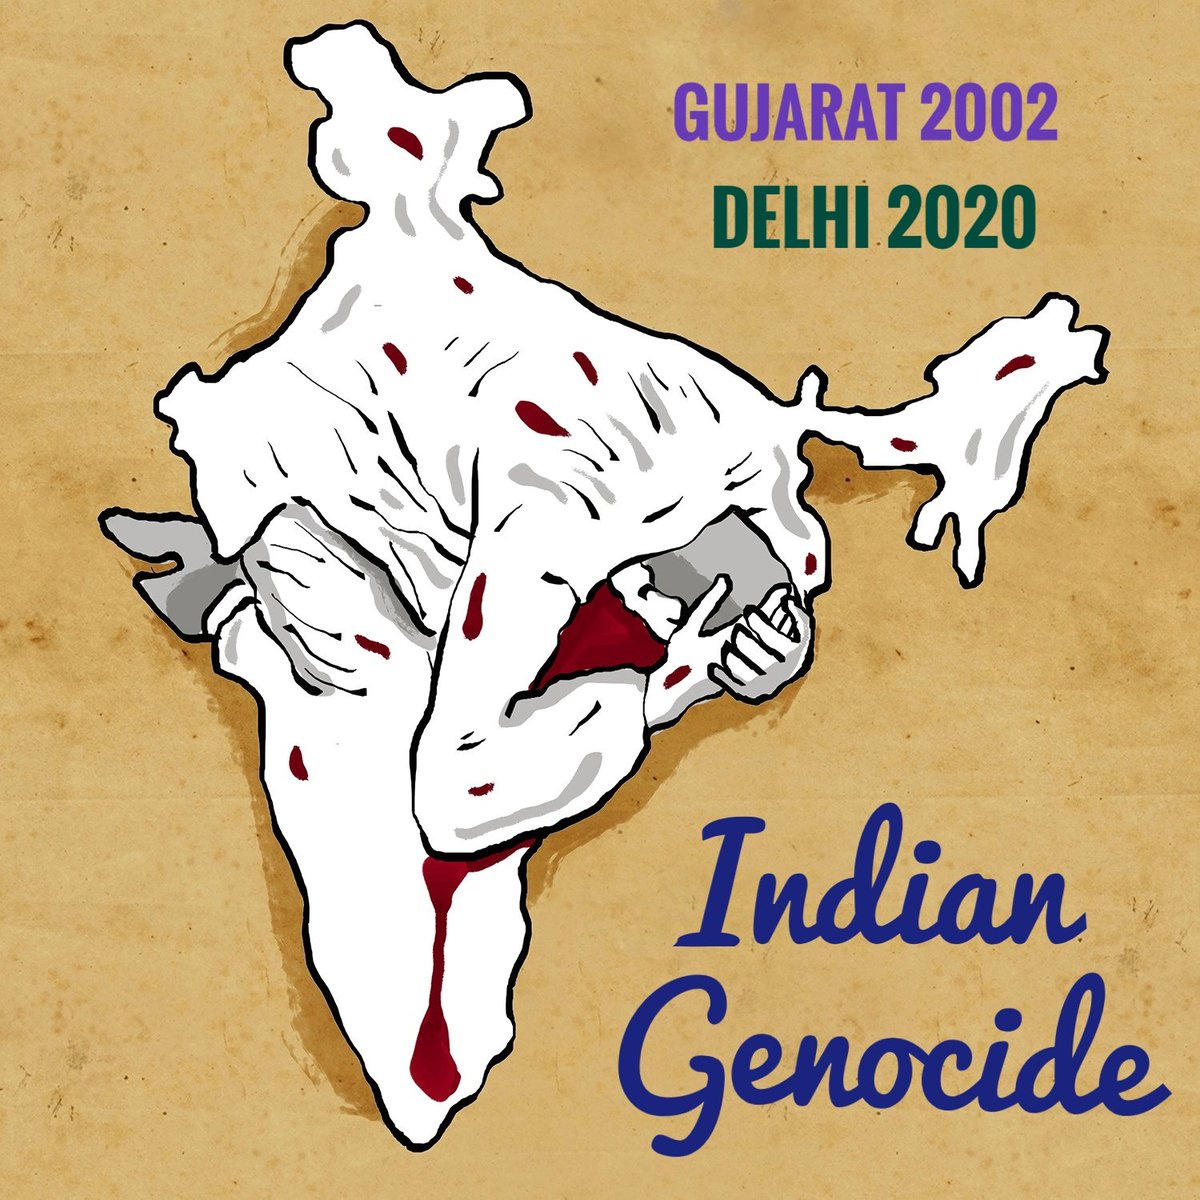 #DelhiPogrom
#HindutvaBurnedDelhi
Save India From Fascist..